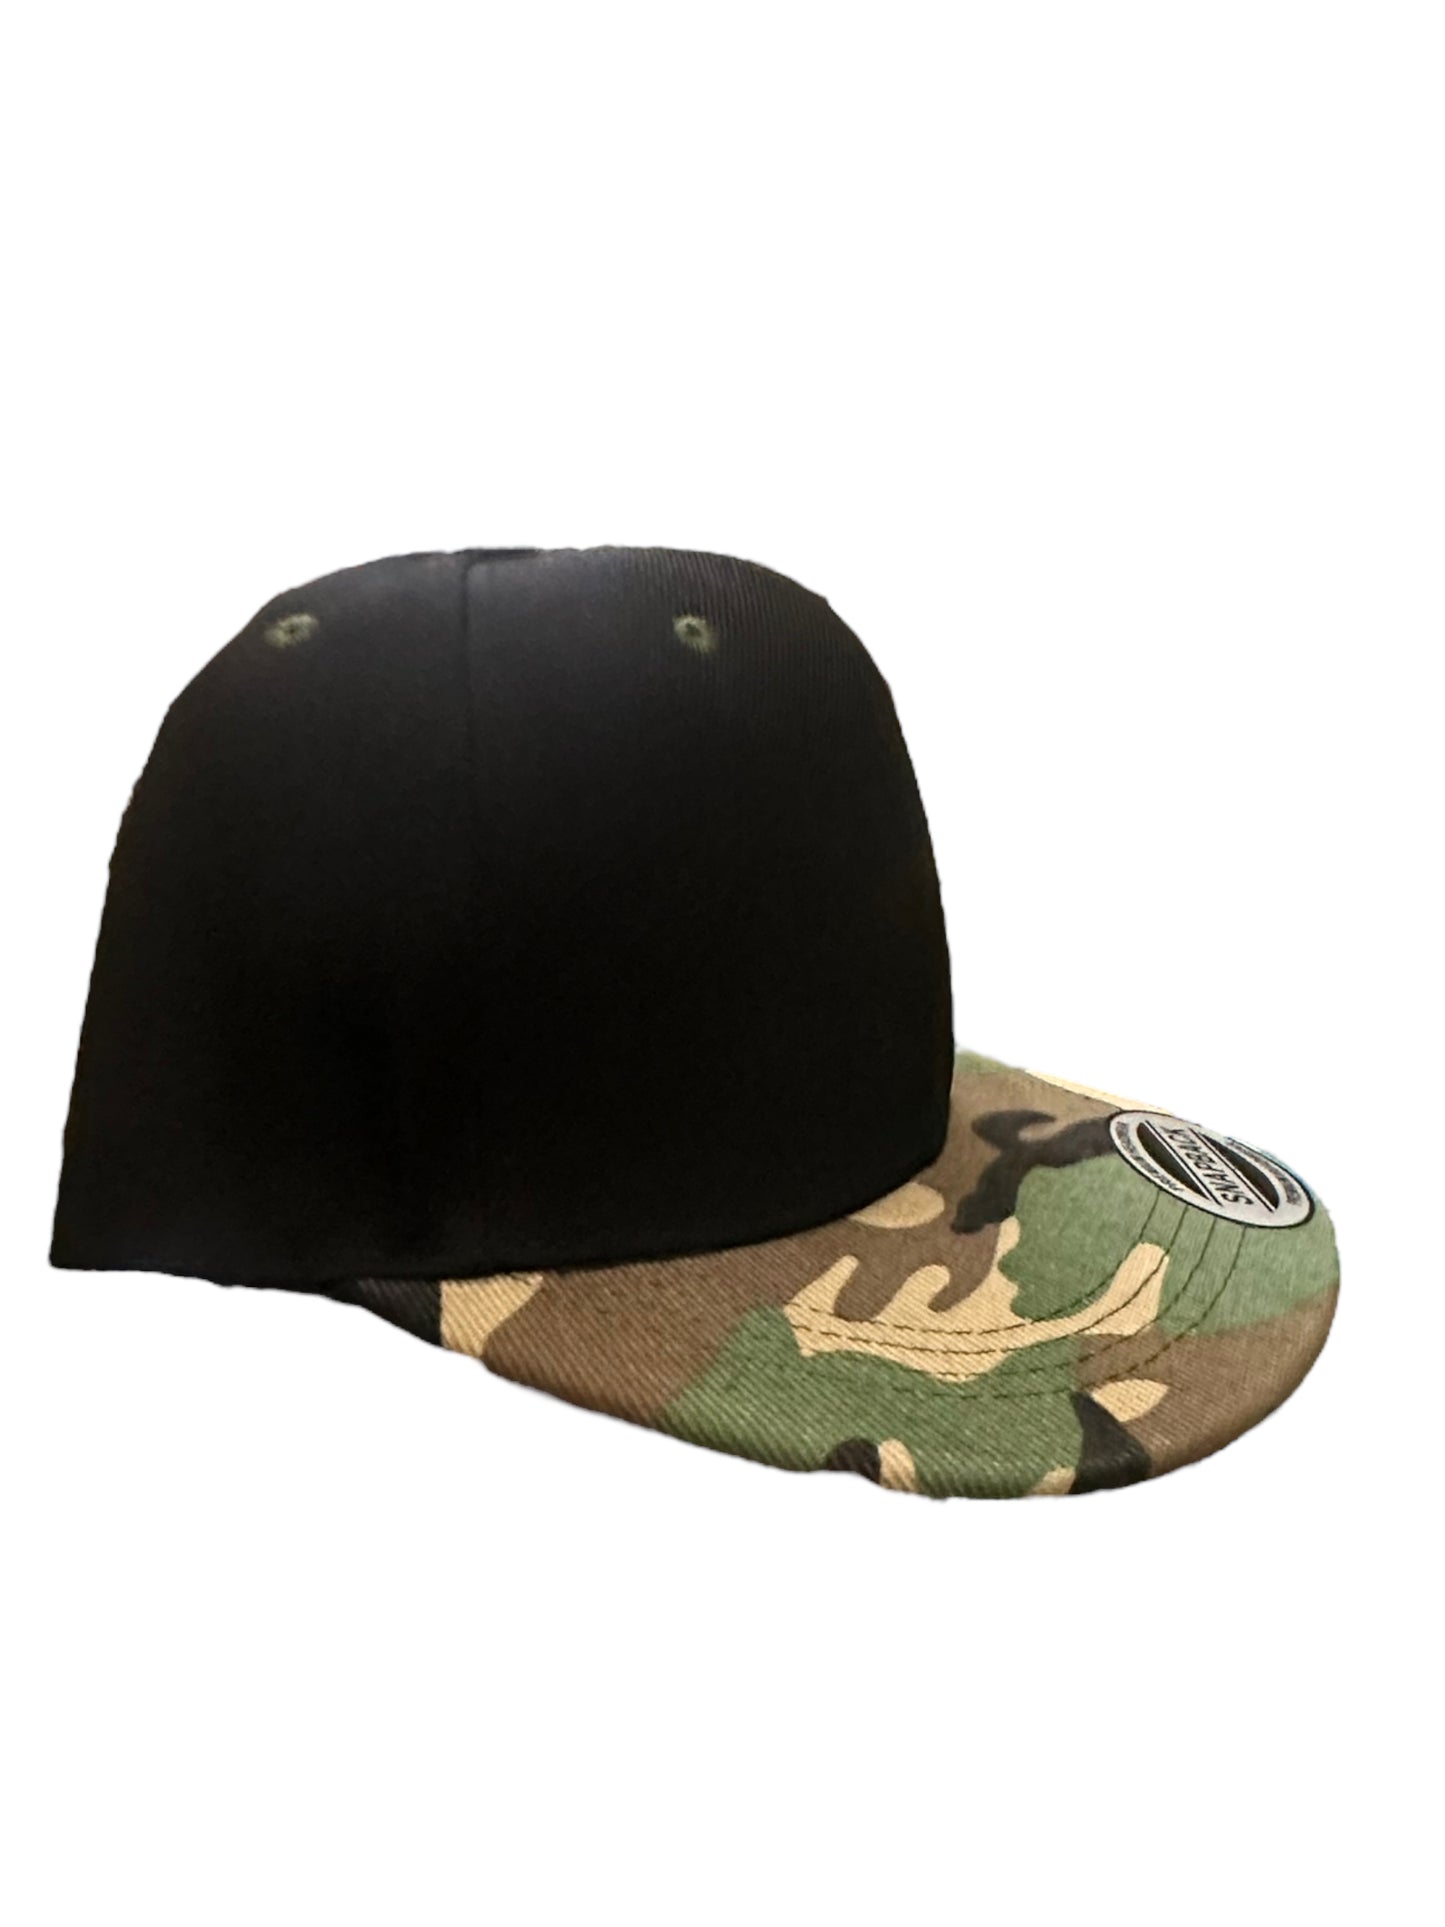 Black crown/ Combat Camouflage bill SnapBacks